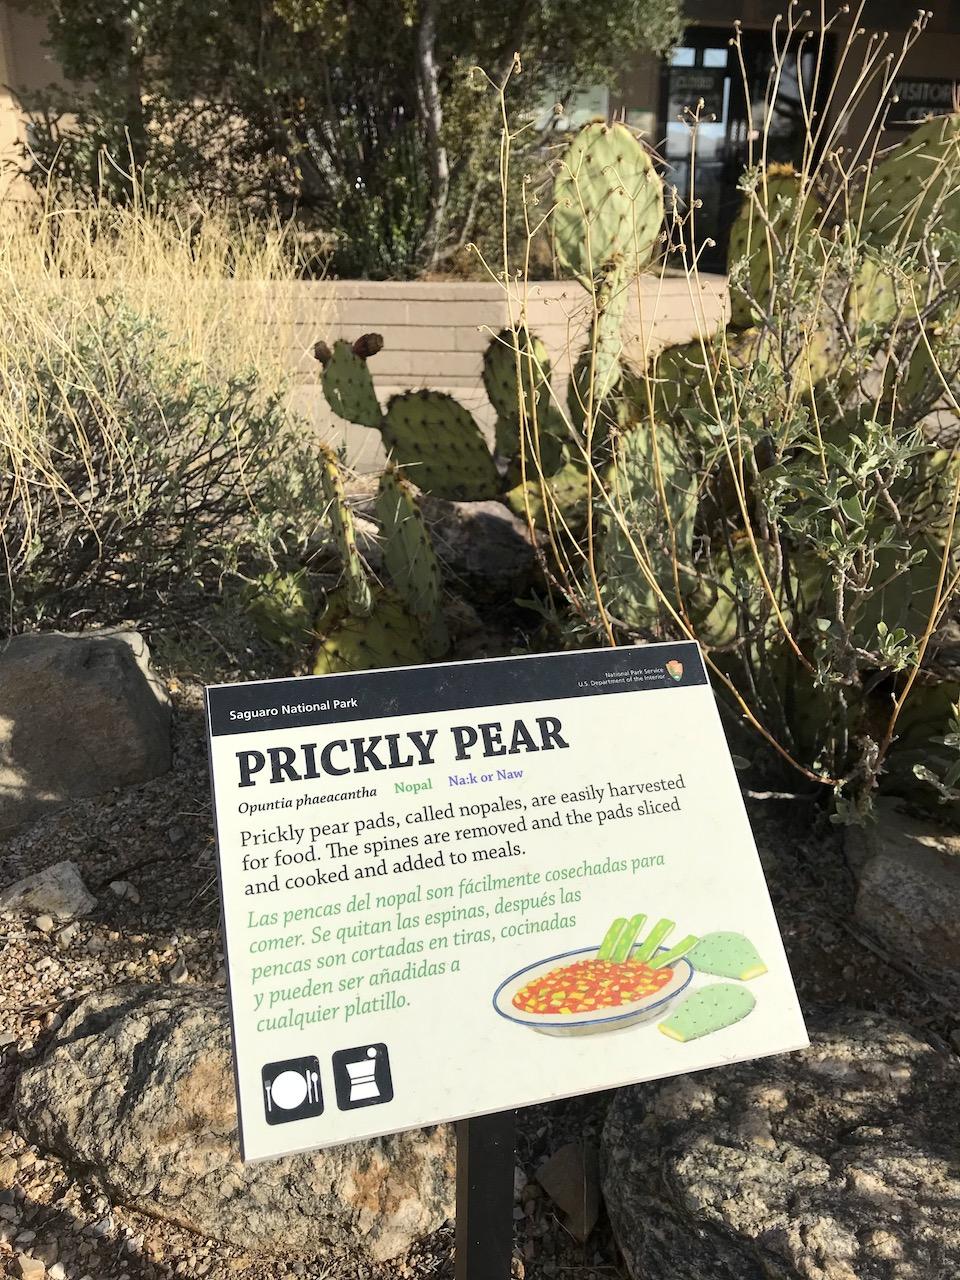 Prickly pear, Ethnobotany Garden, Saguaro National Park/Kurt Repanshek